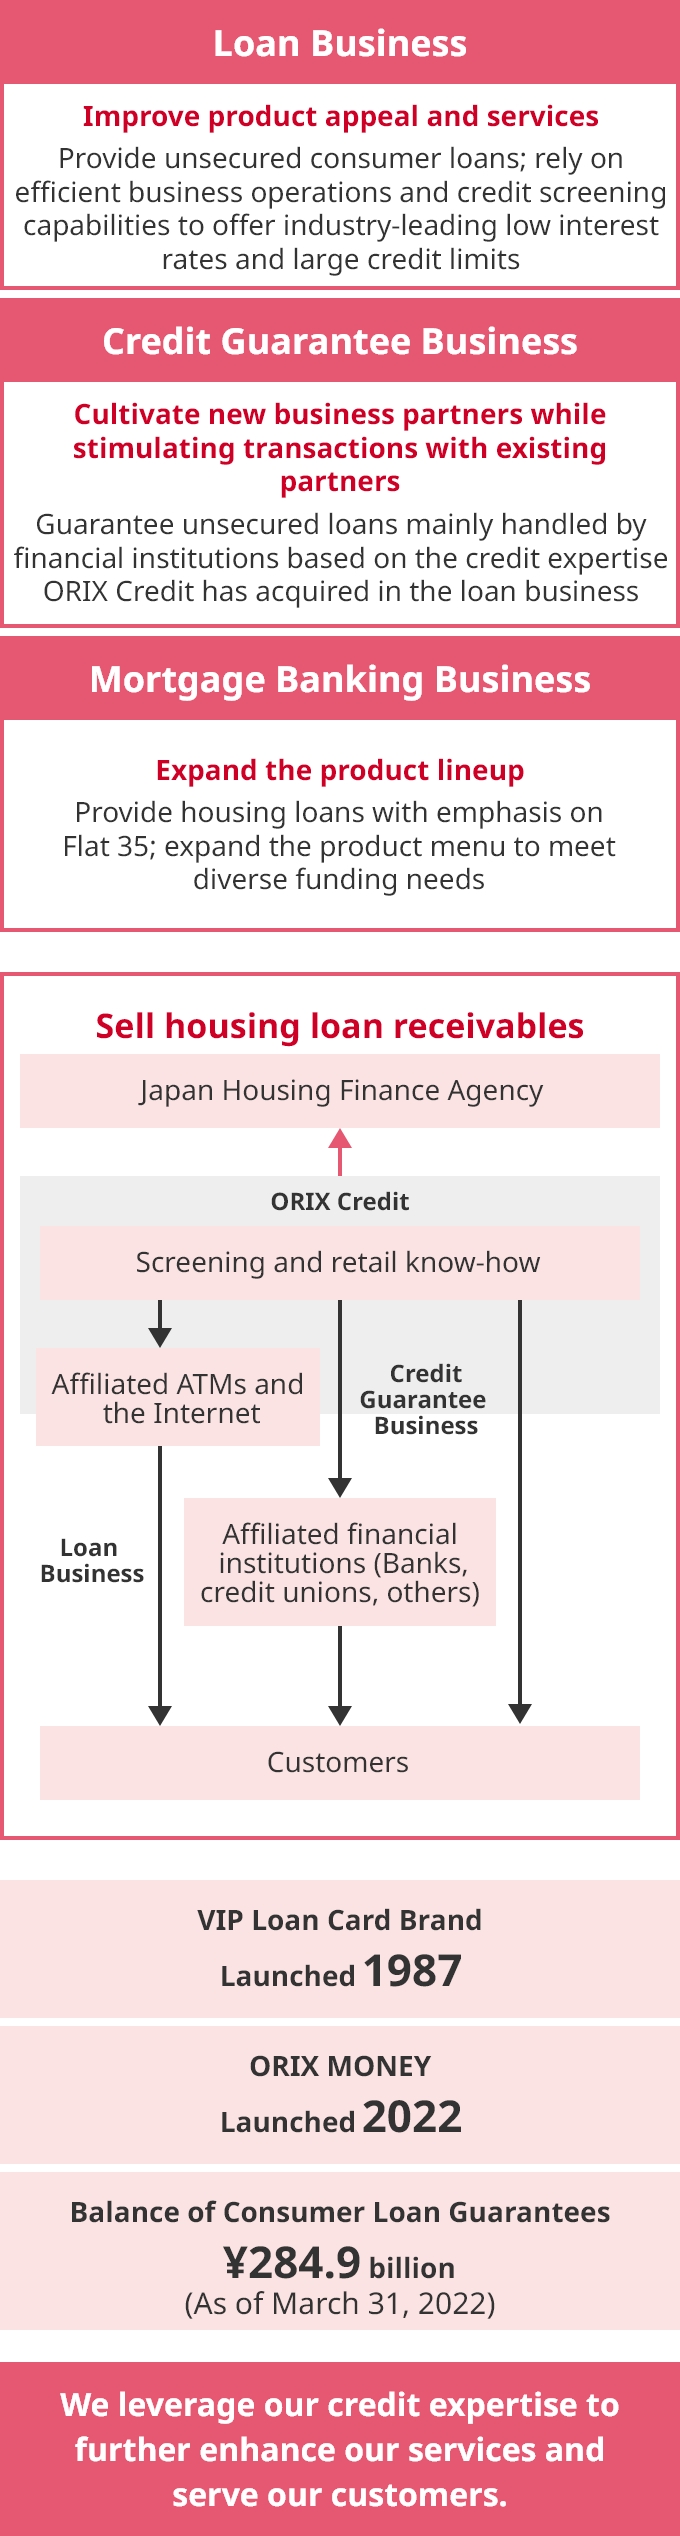 ORIX Credit’s Business Model